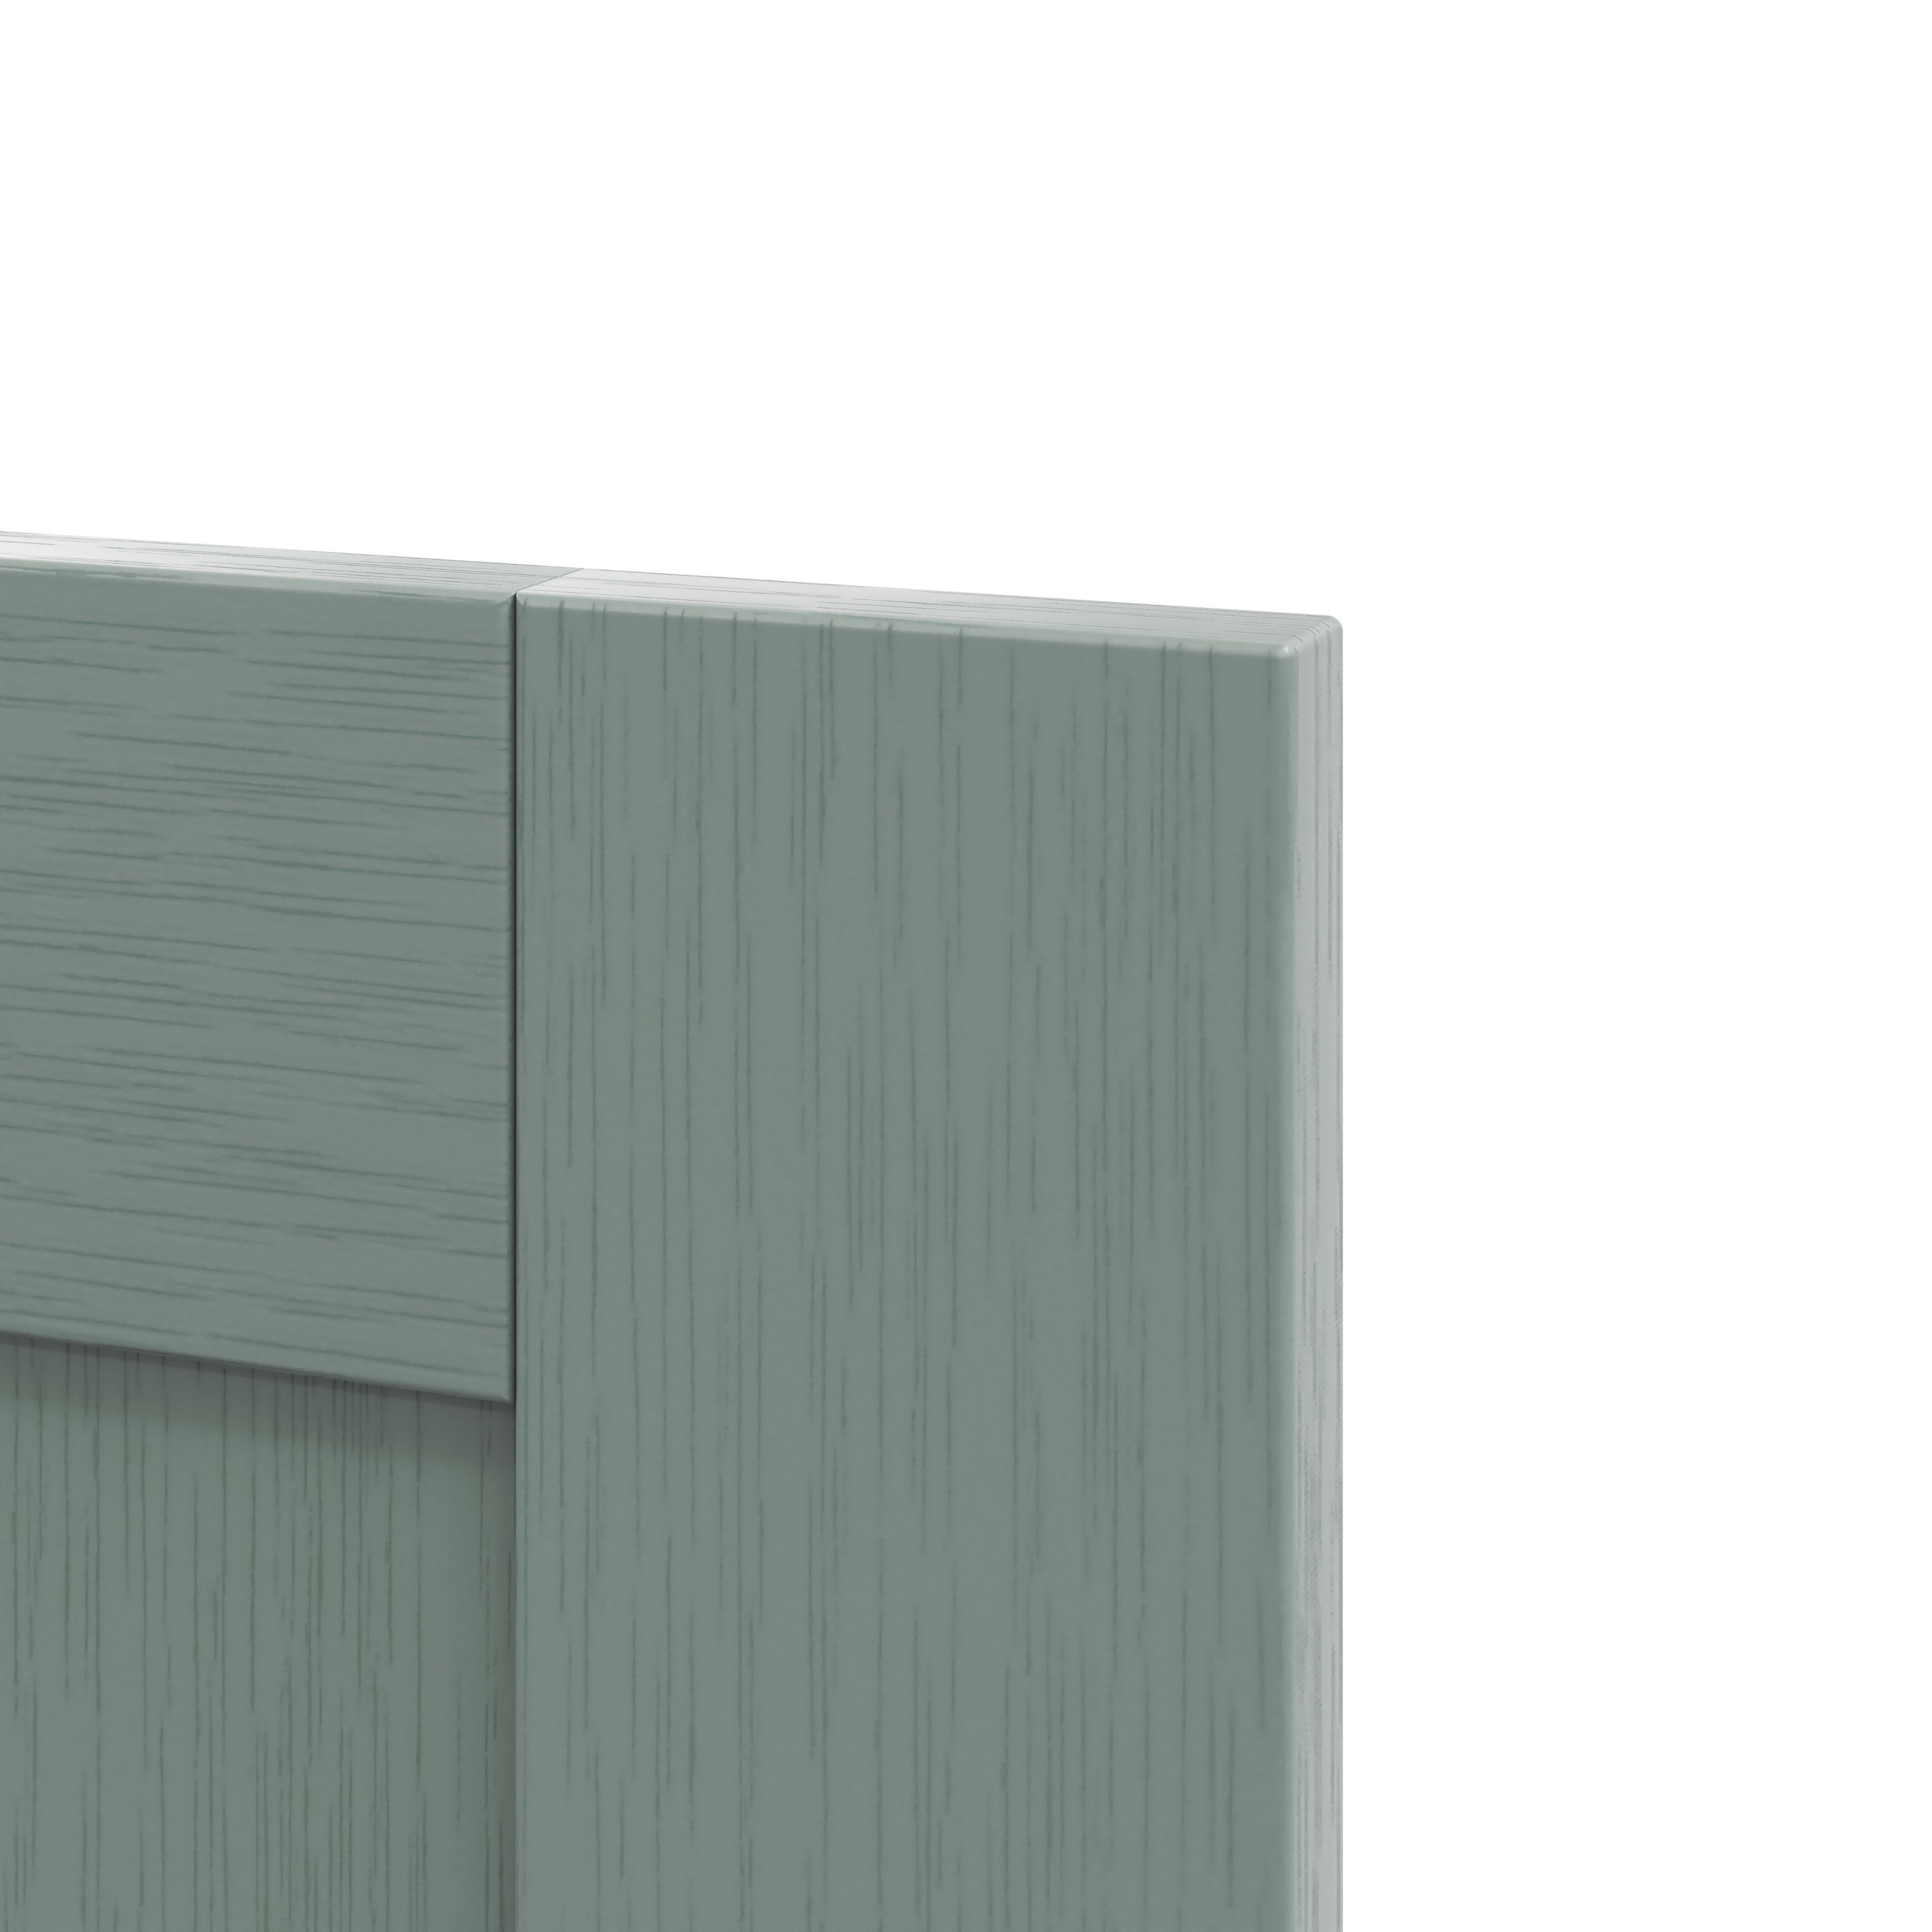 GoodHome Alpinia Matt Green Painted Wood Effect Shaker Tall appliance Cabinet door (W)600mm (H)806mm (T)18mm